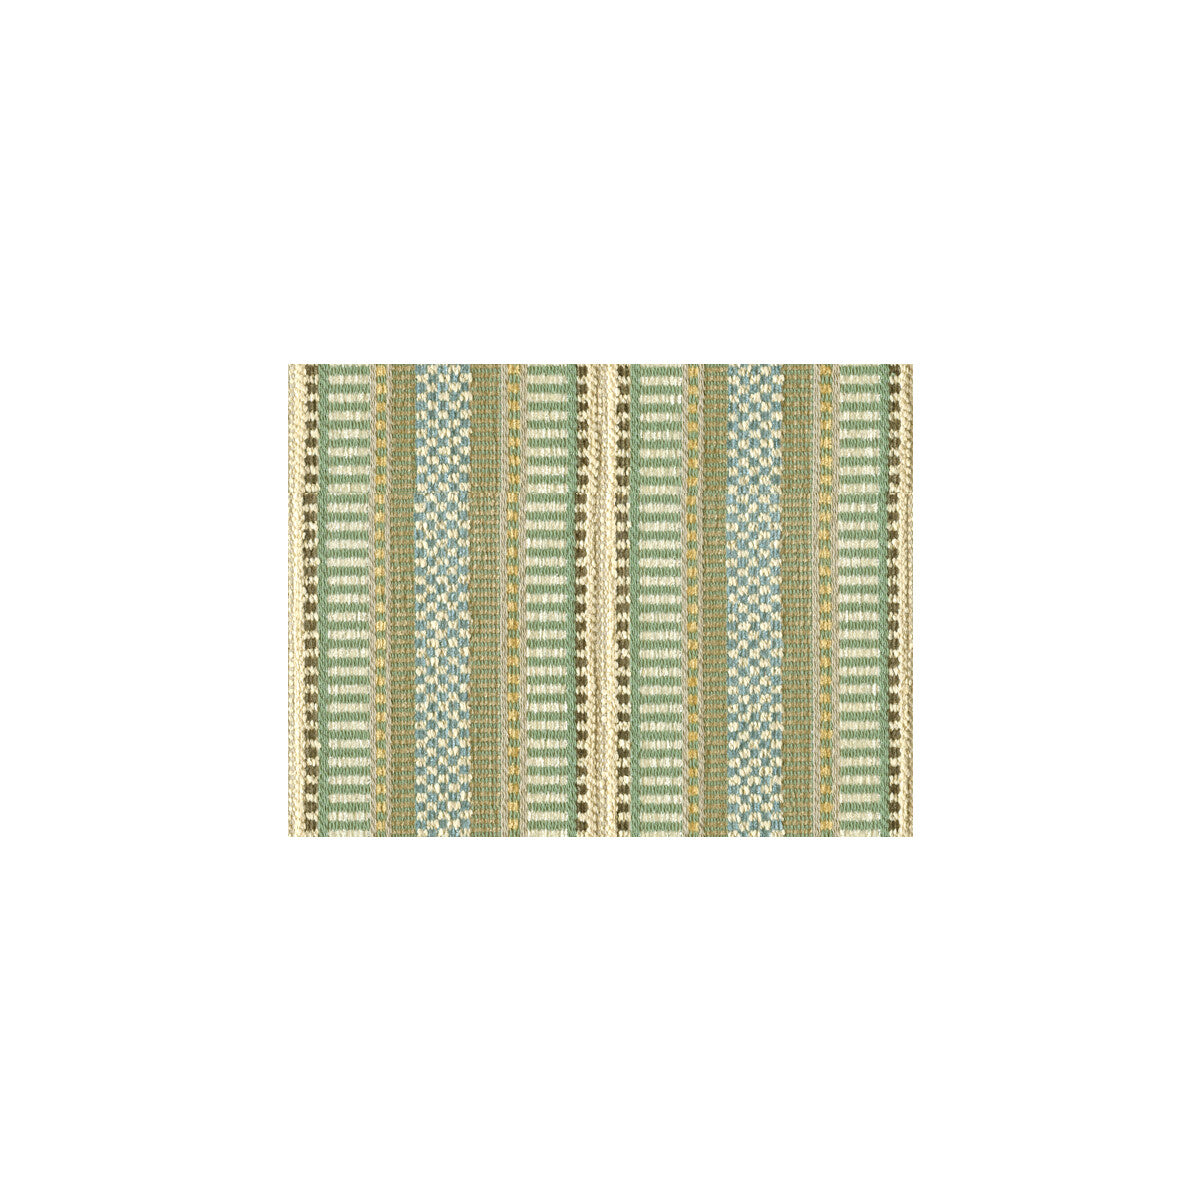 Kravet Design fabric in 32552-1630 color - pattern 32552.1630.0 - by Kravet Design in the Gis collection